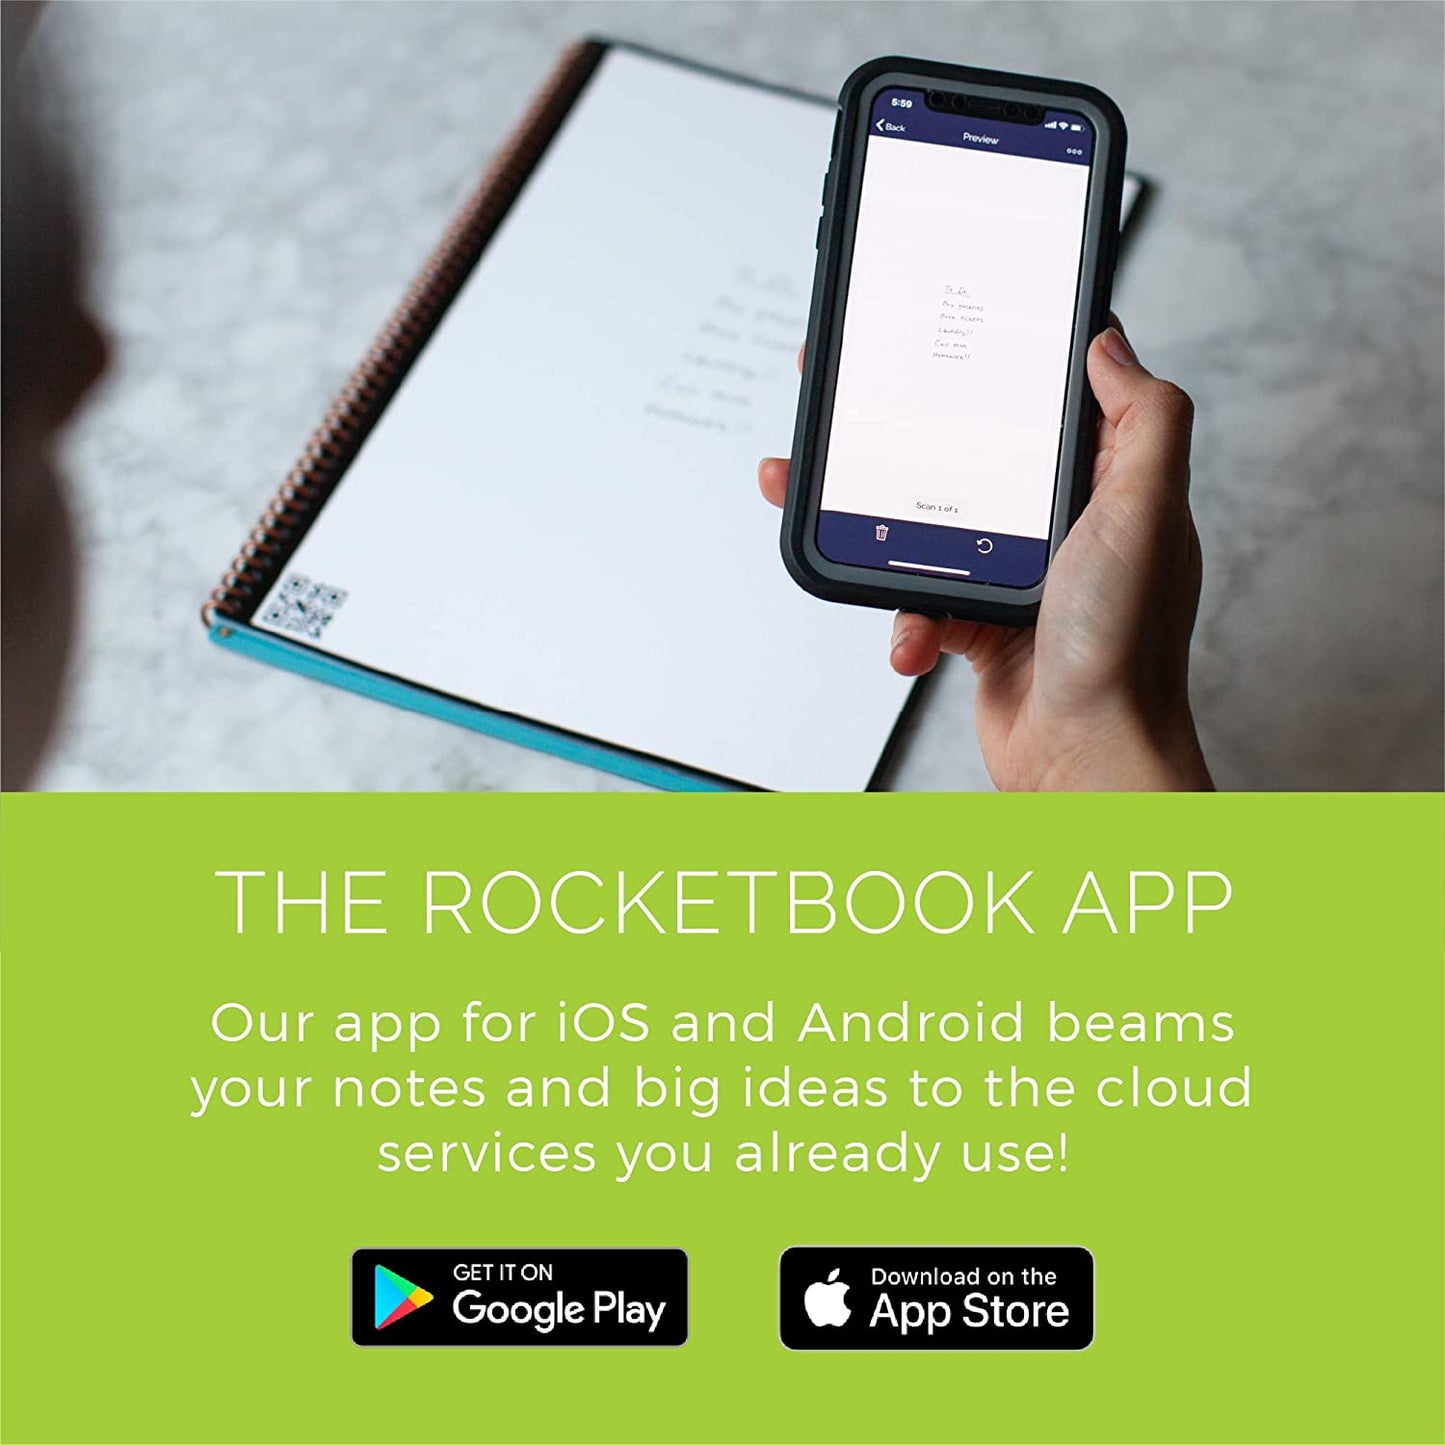 Rocketbook Smart Reusable Notebook Black